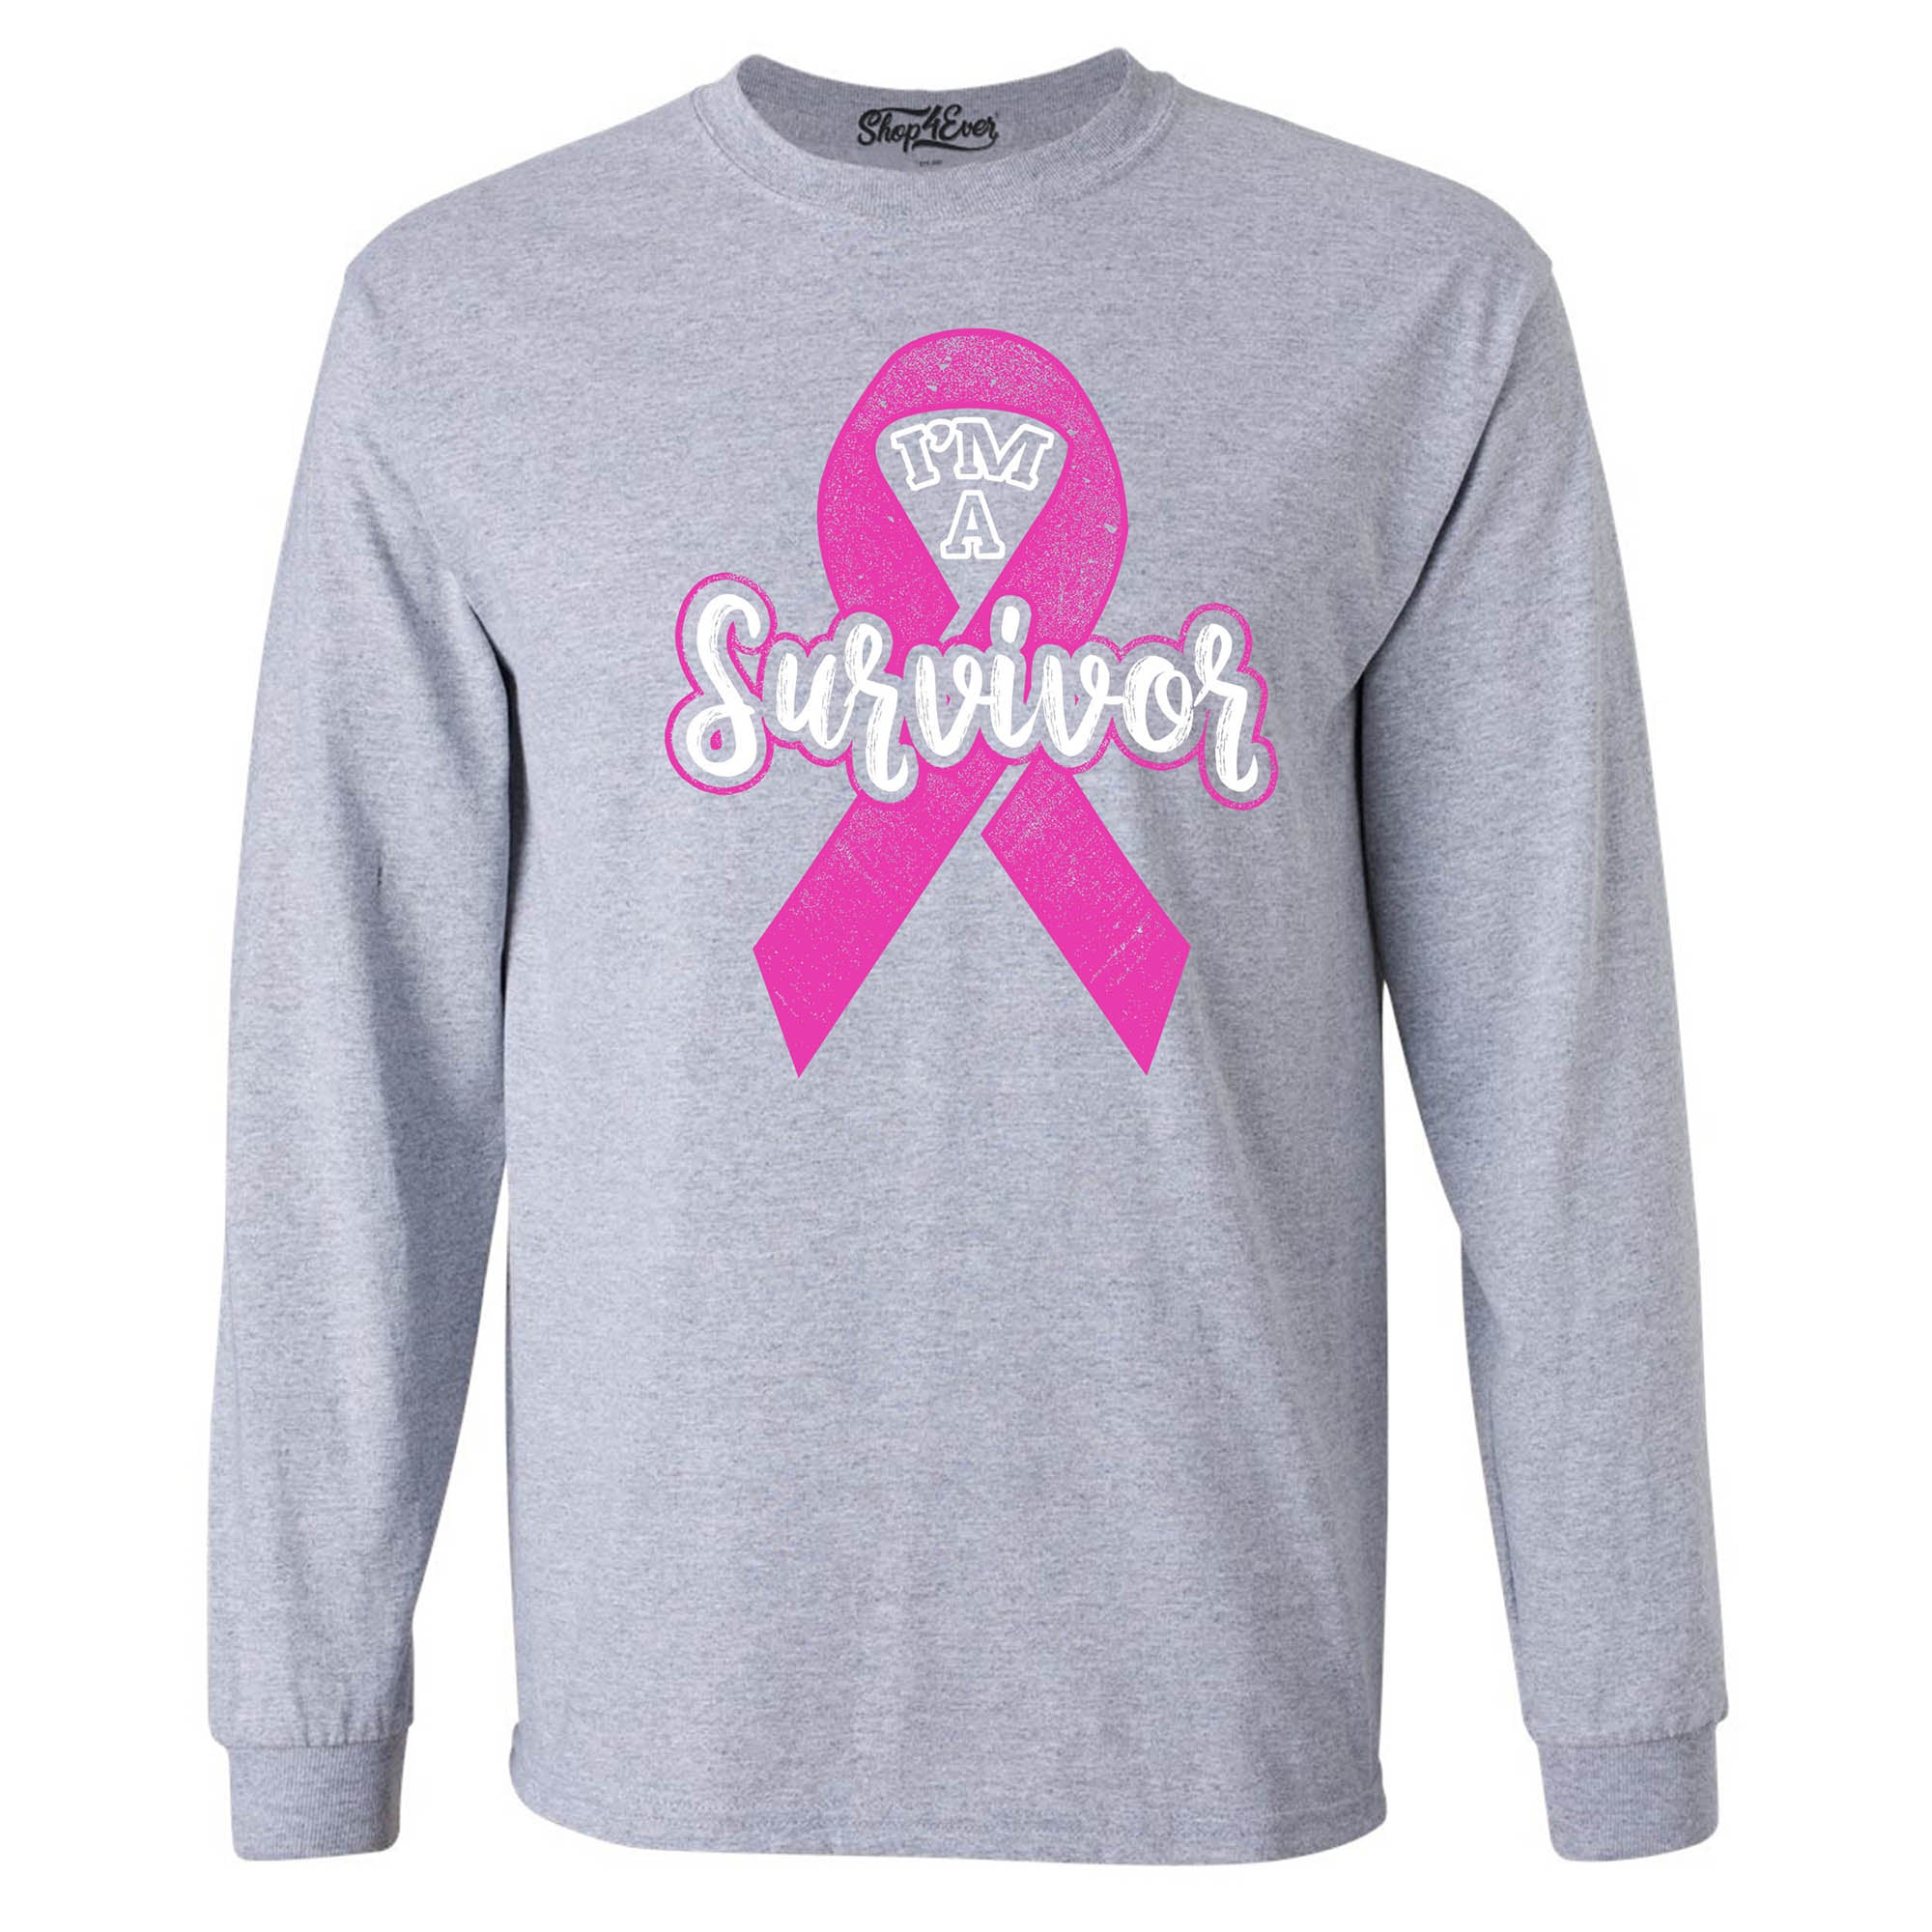 I'm A Survivor Breast Cancer Awareness Long Sleeve Shirt